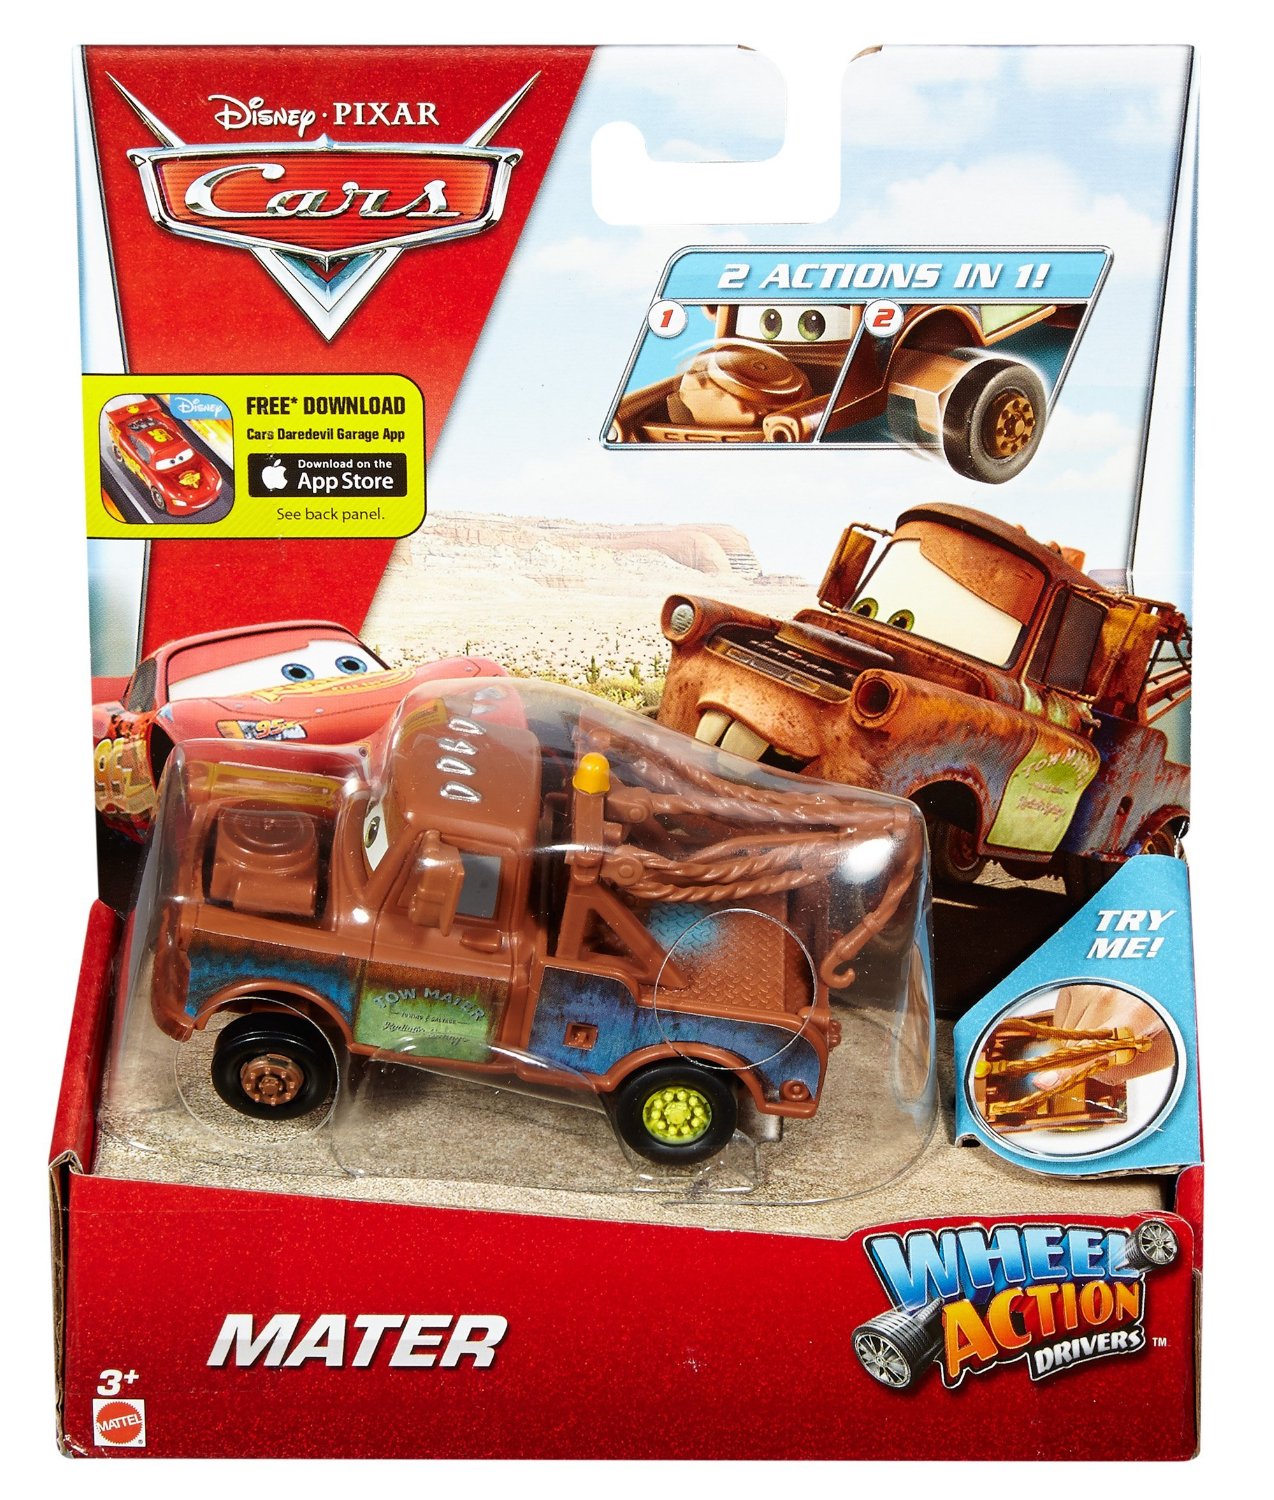 Тачки: Мэтр (Cars: Action Drivers Mater)